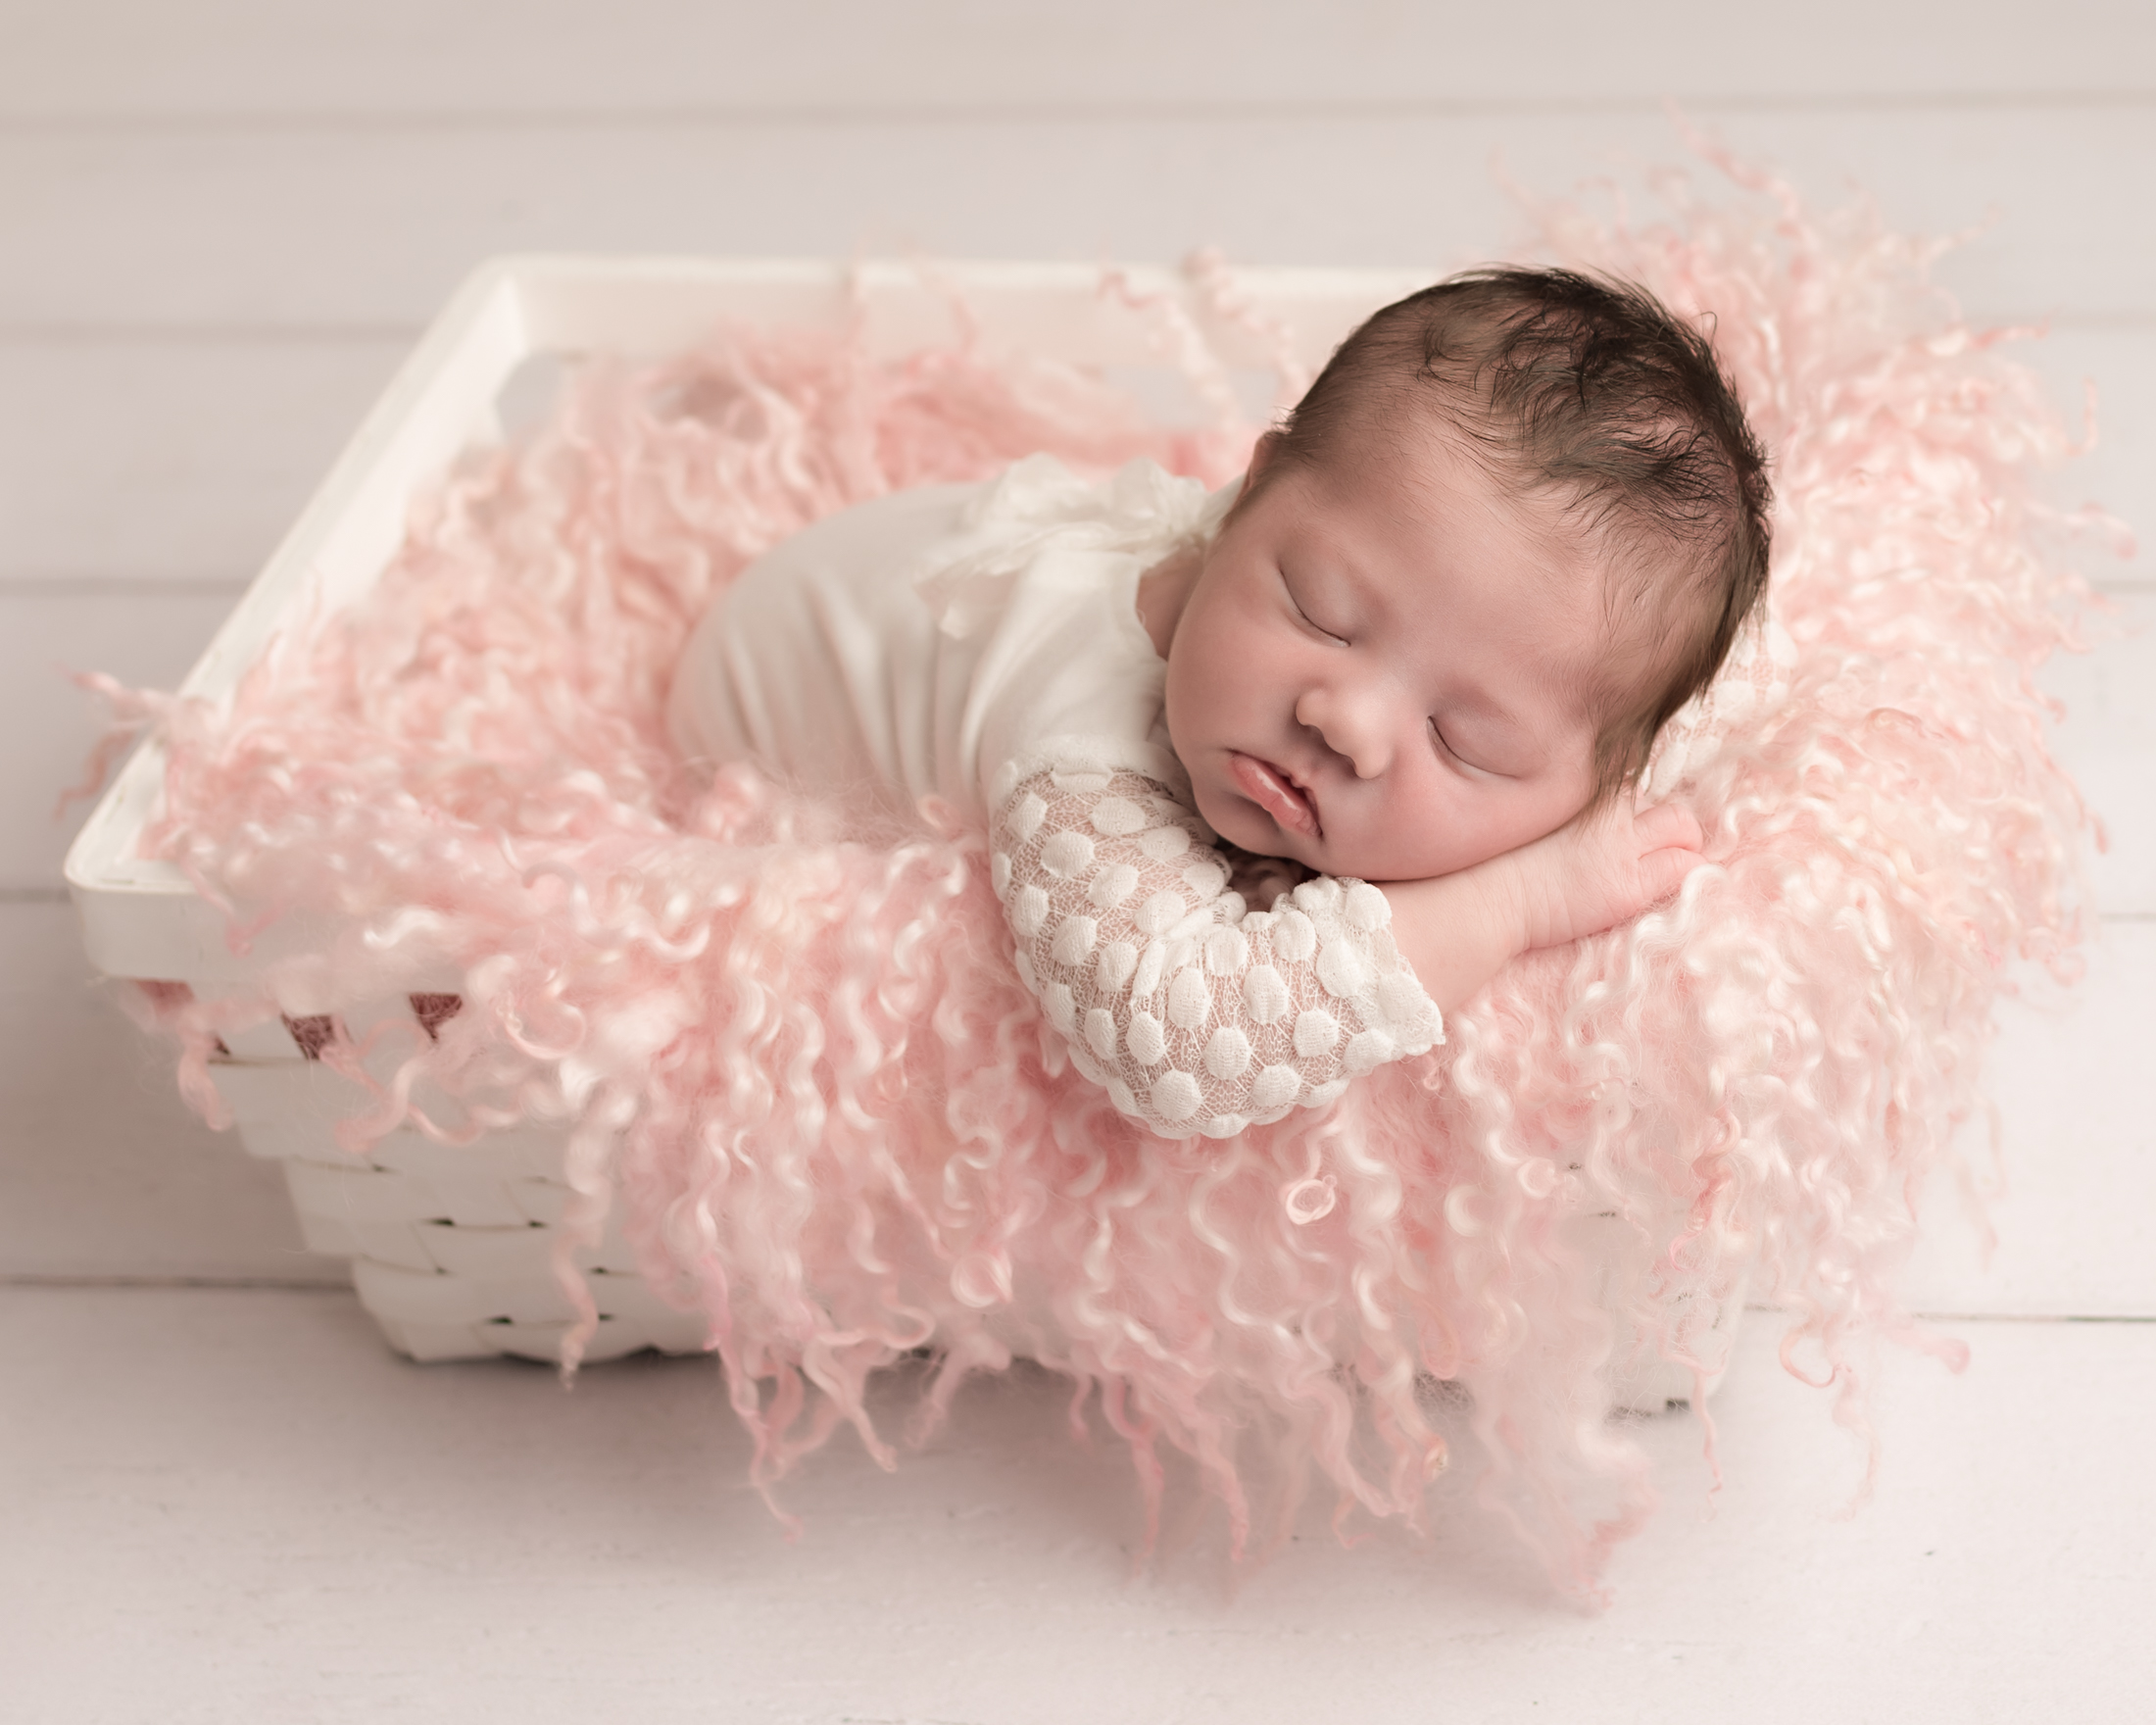 Newborn_baby_photographer_dudley_midlands_posing_in_basket